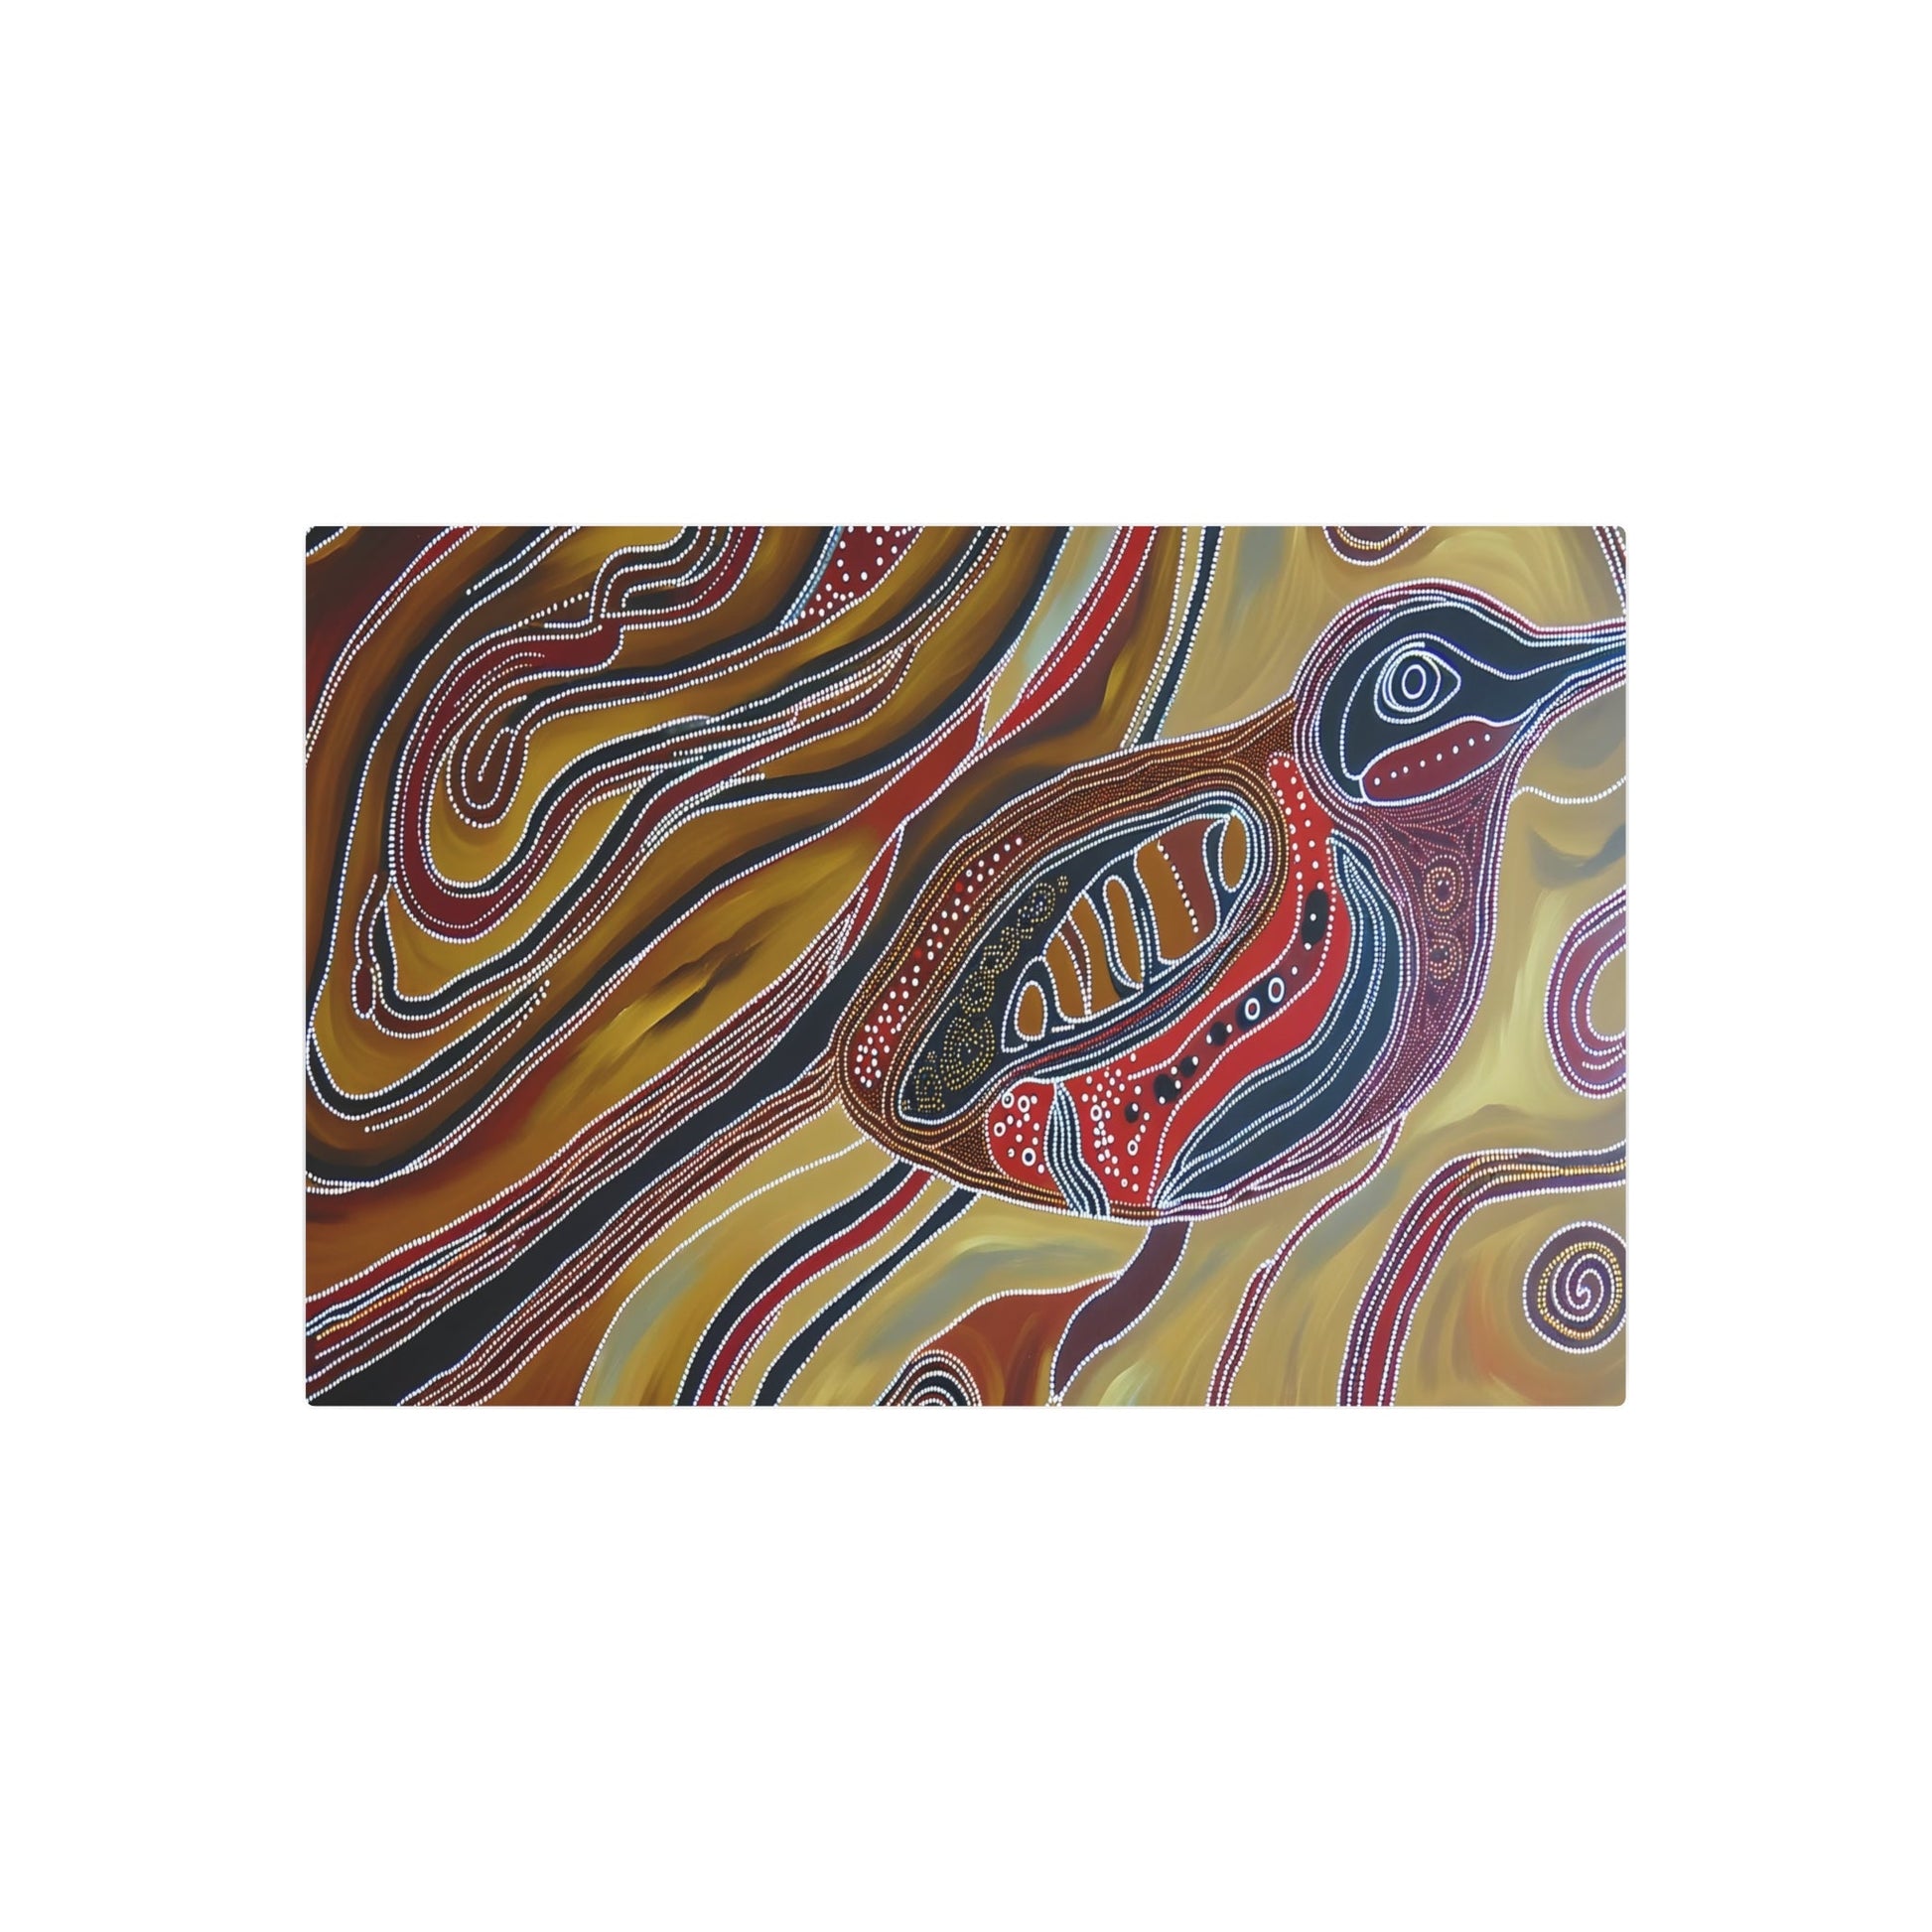 Metal Poster Art | "Traditional Australian Aboriginal Art - Bird Themed Artwork in Non-Western & Global Styles Category" - Metal Poster Art 36″ x 24″ (Horizontal) 0.12''